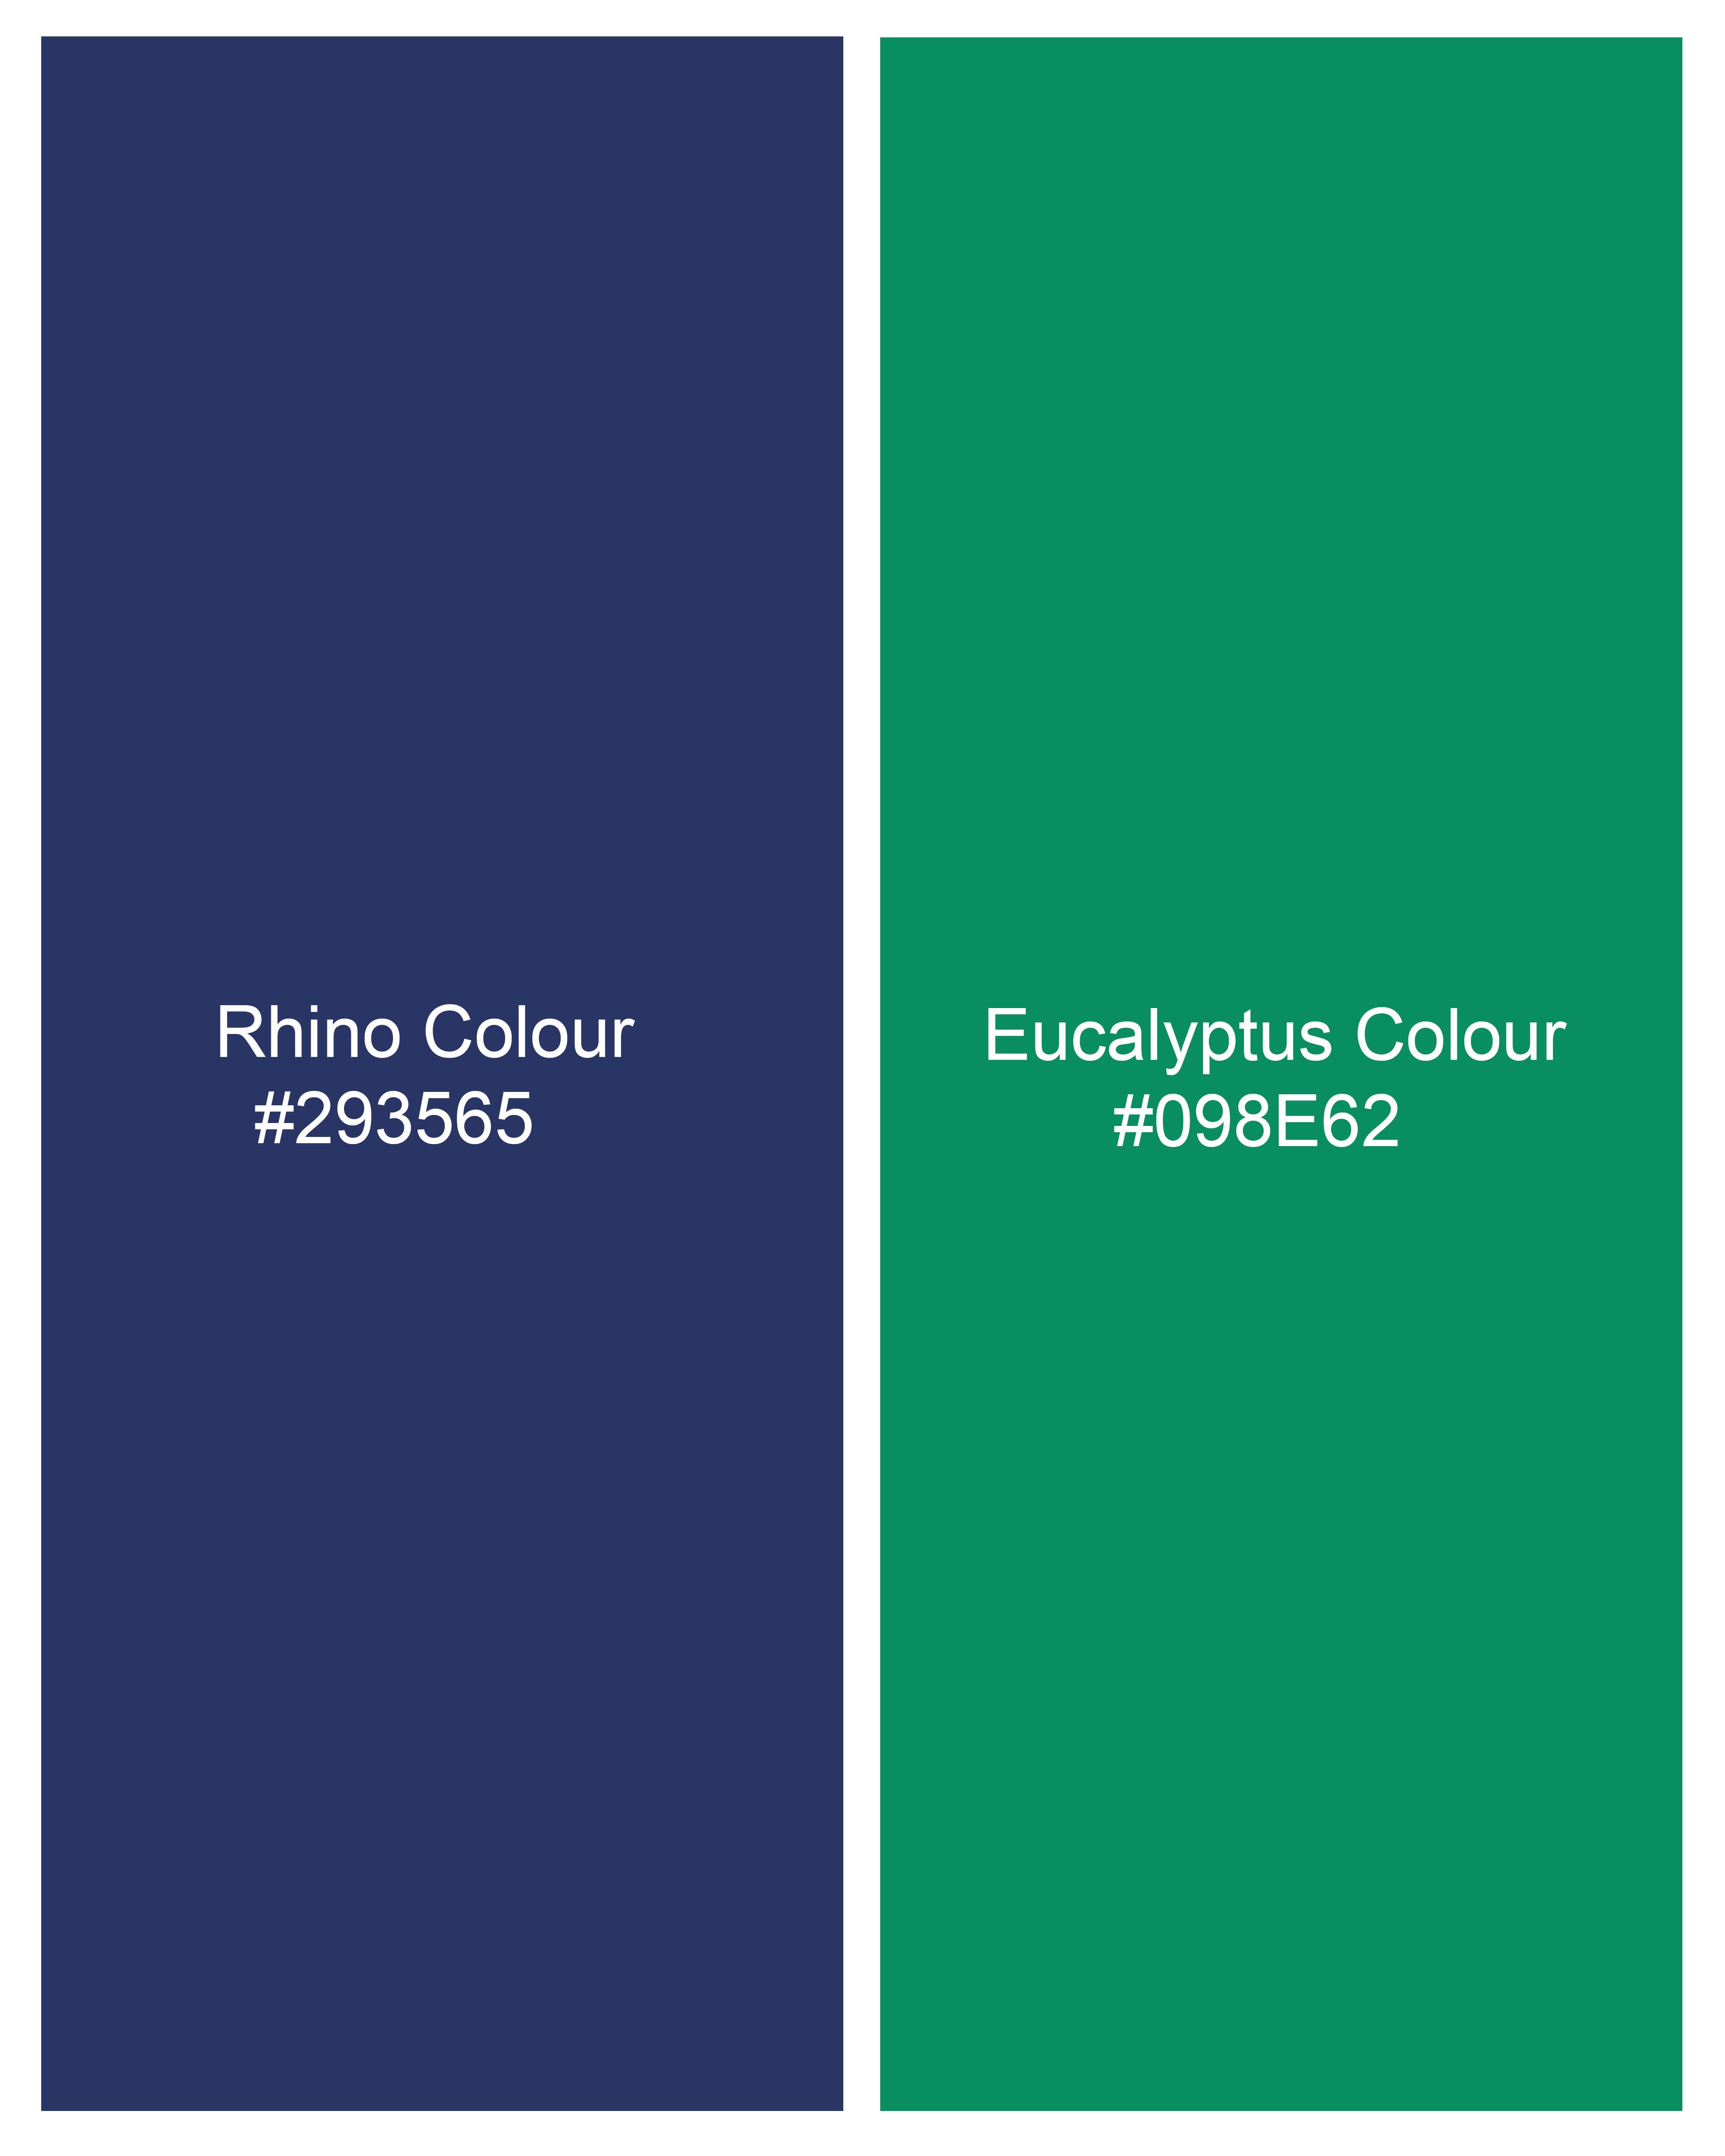 Eucalyptus Green with Rhino Blue Striped Dobby Premium Giza Cotton Shirt 9438-CA-38, 9438-CA-H-38, 9438-CA-39, 9438-CA-H-39, 9438-CA-40, 9438-CA-H-40, 9438-CA-42, 9438-CA-H-42, 9438-CA-44, 9438-CA-H-44, 9438-CA-46, 9438-CA-H-46, 9438-CA-48, 9438-CA-H-48, 9438-CA-50, 9438-CA-H-50, 9438-CA-52, 9438-CA-H-52